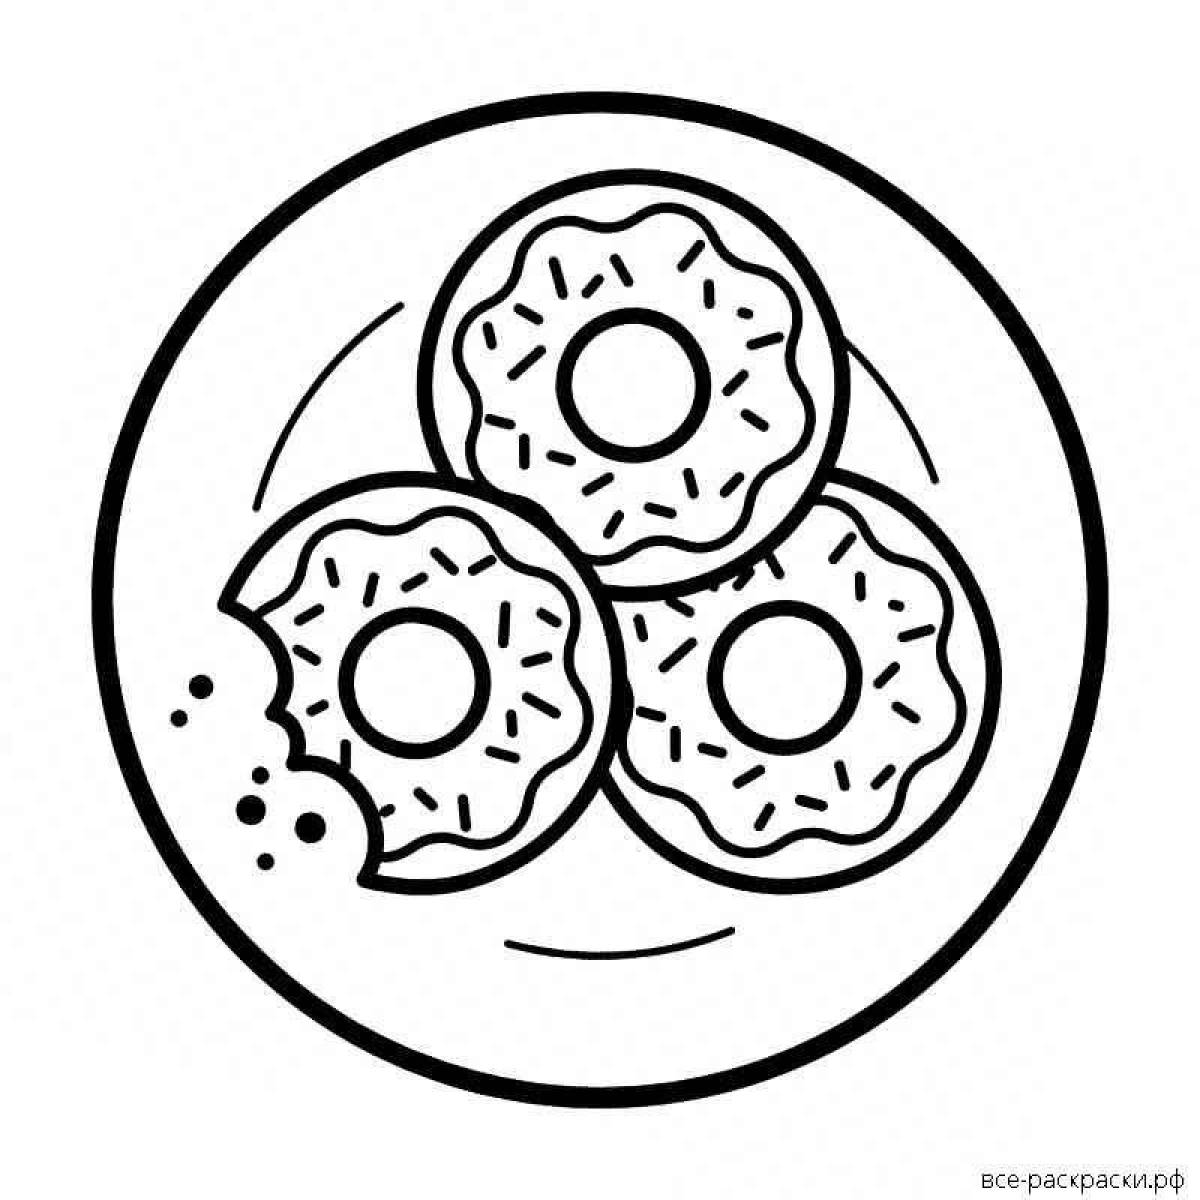 Coloring page joyful donut